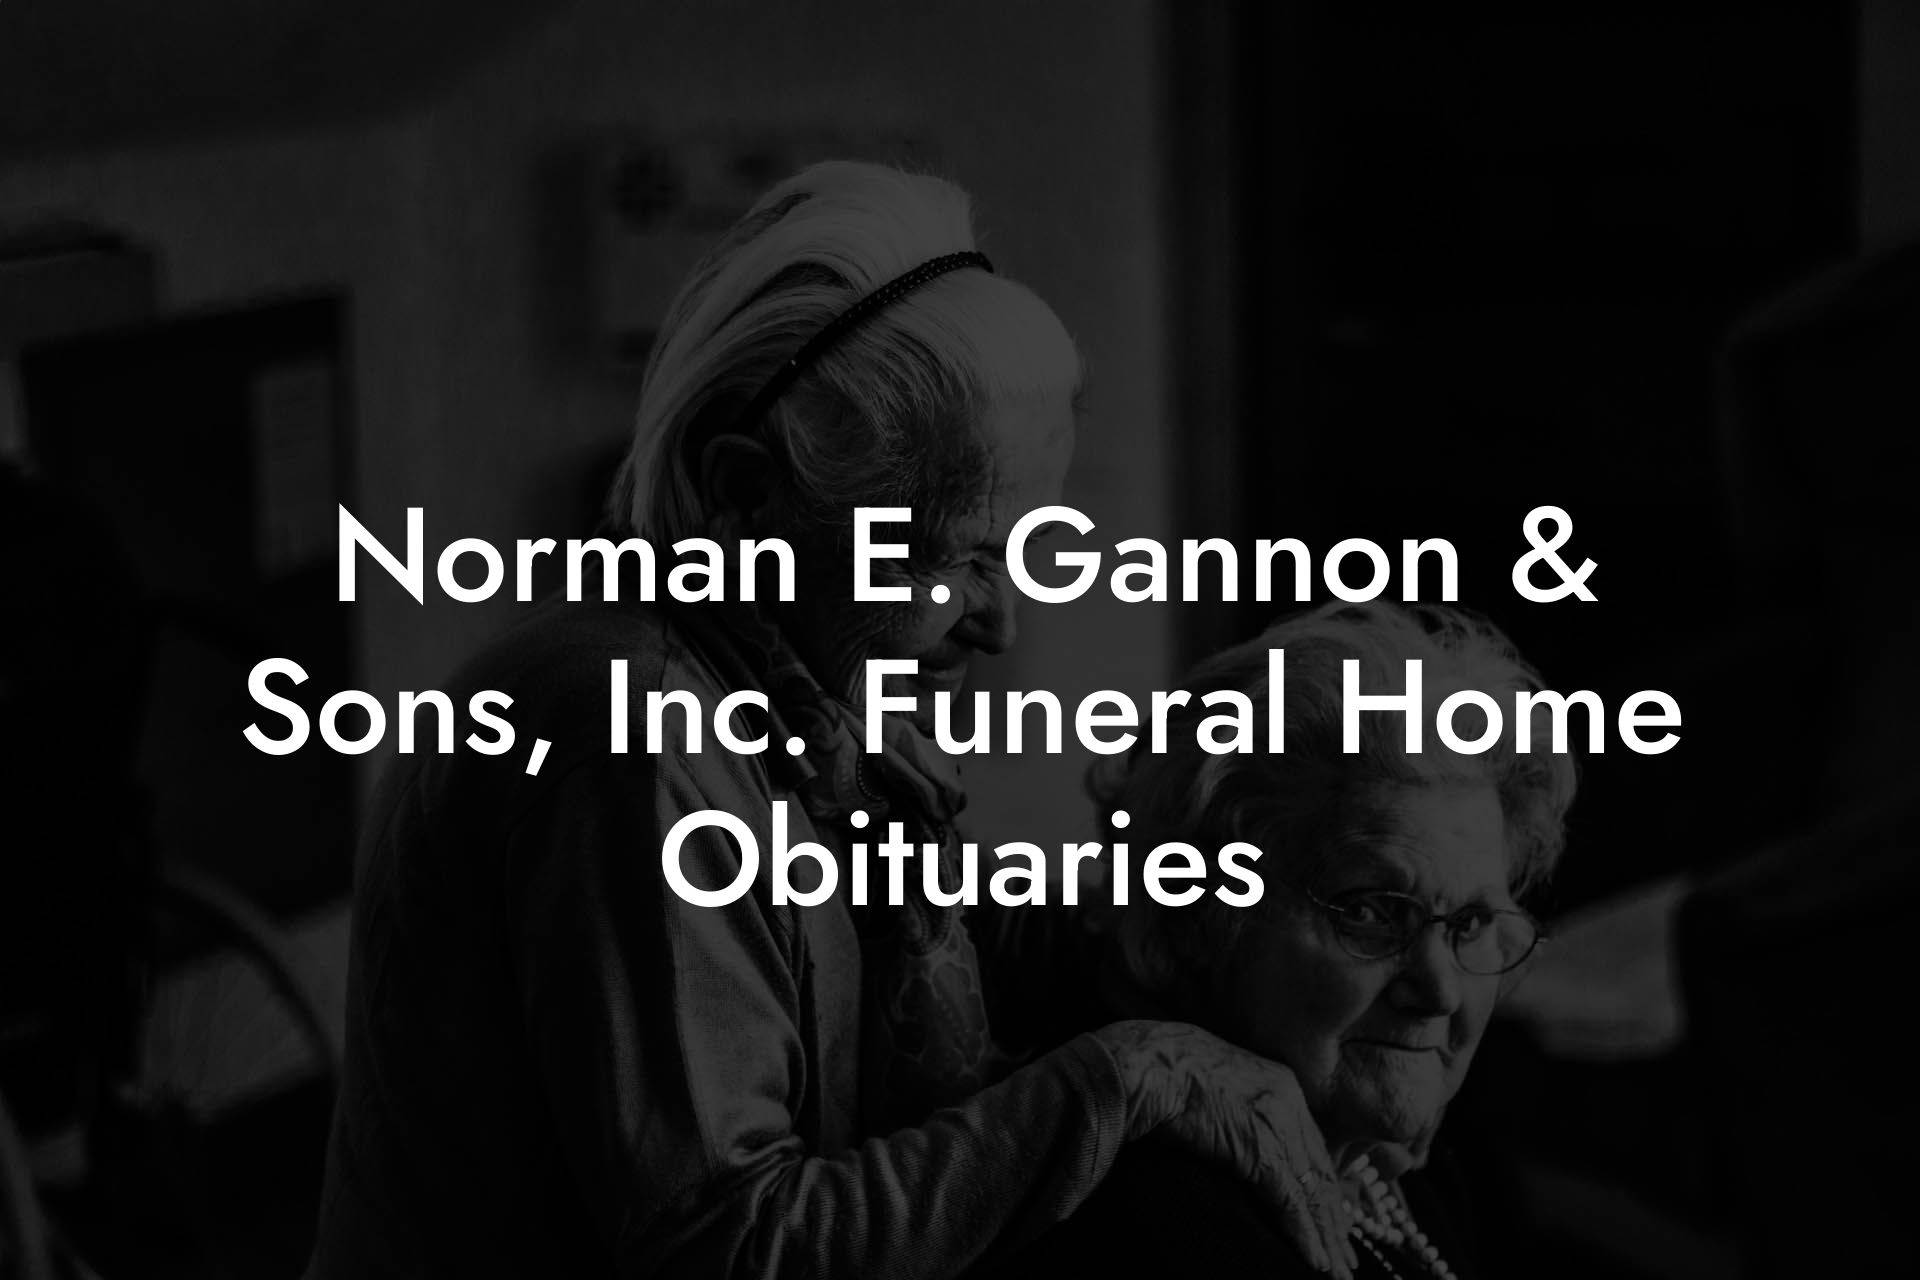 Norman E. Gannon & Sons, Inc. Funeral Home Obituaries